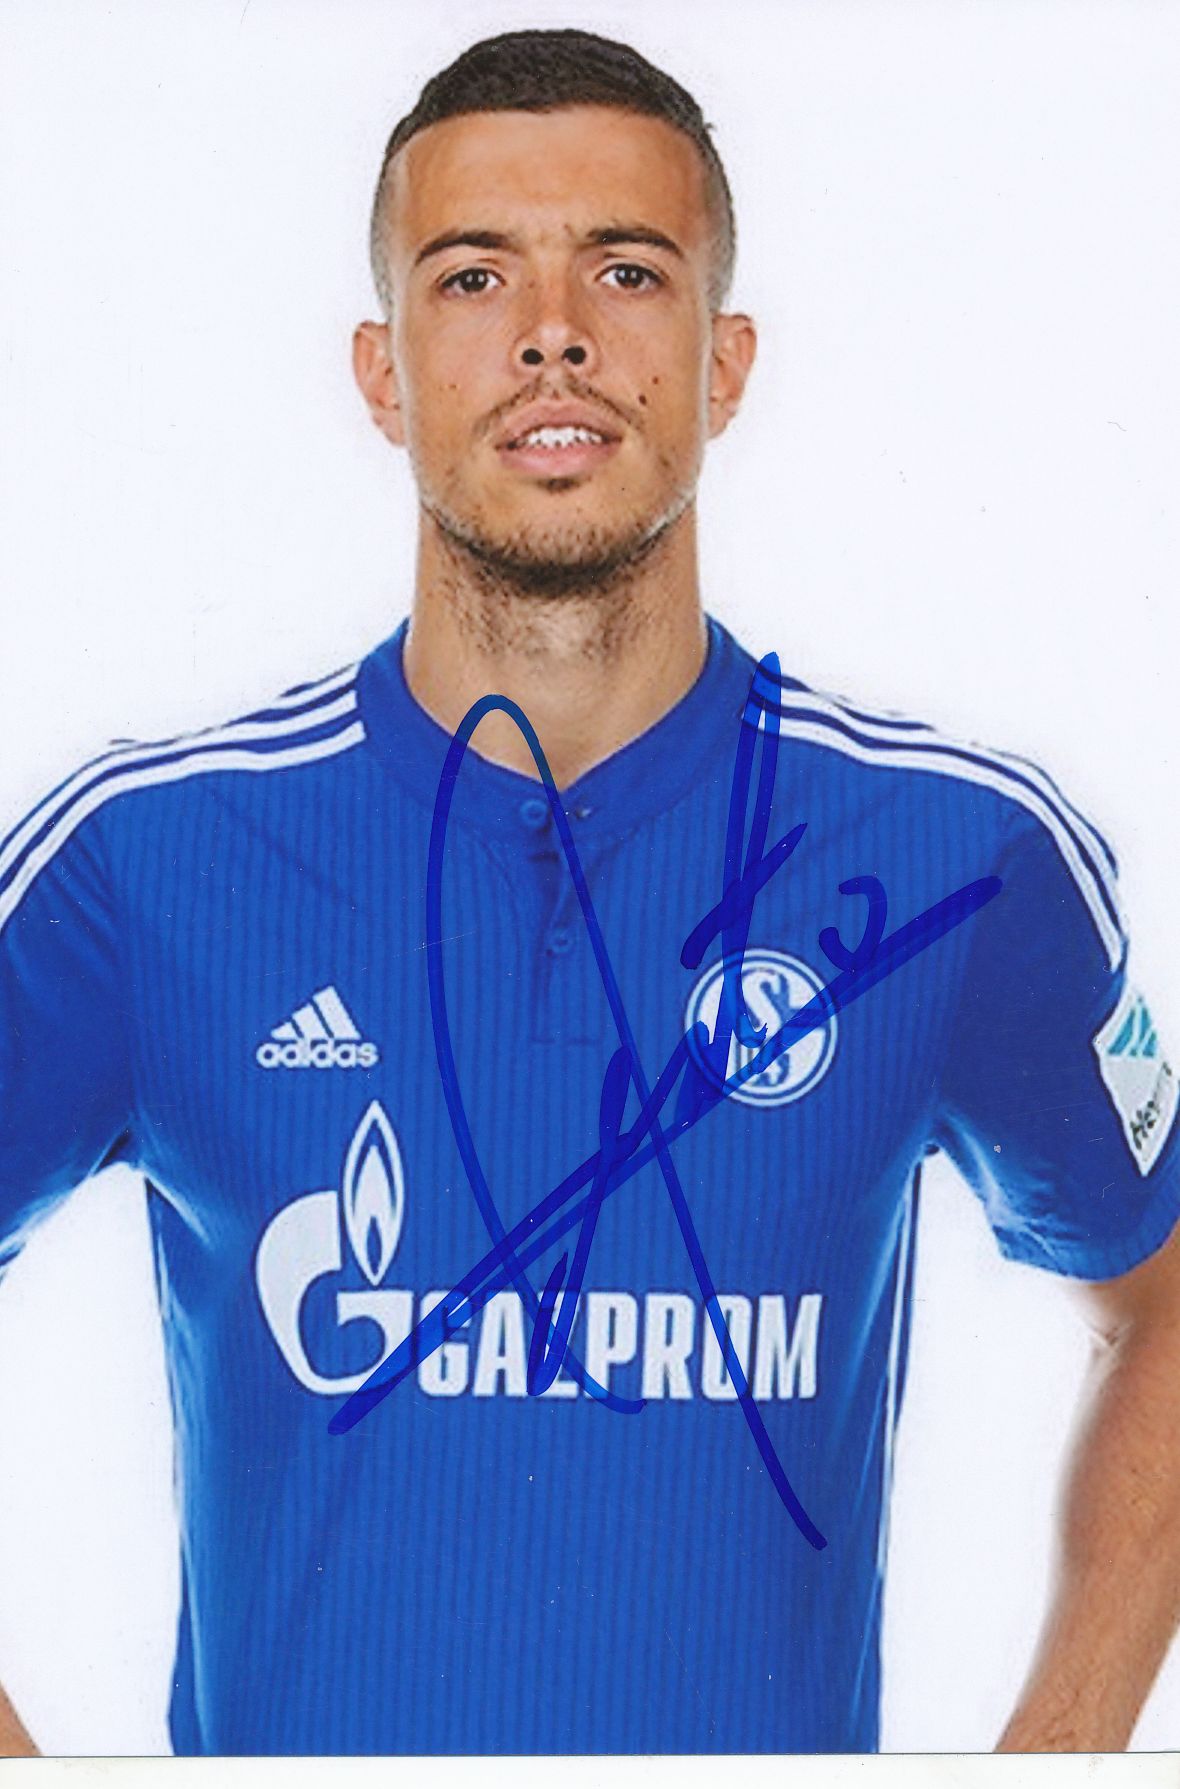 Franco Di Santo   FC Schalke 04  2015/2016 Autogrammkarte signiert  302576